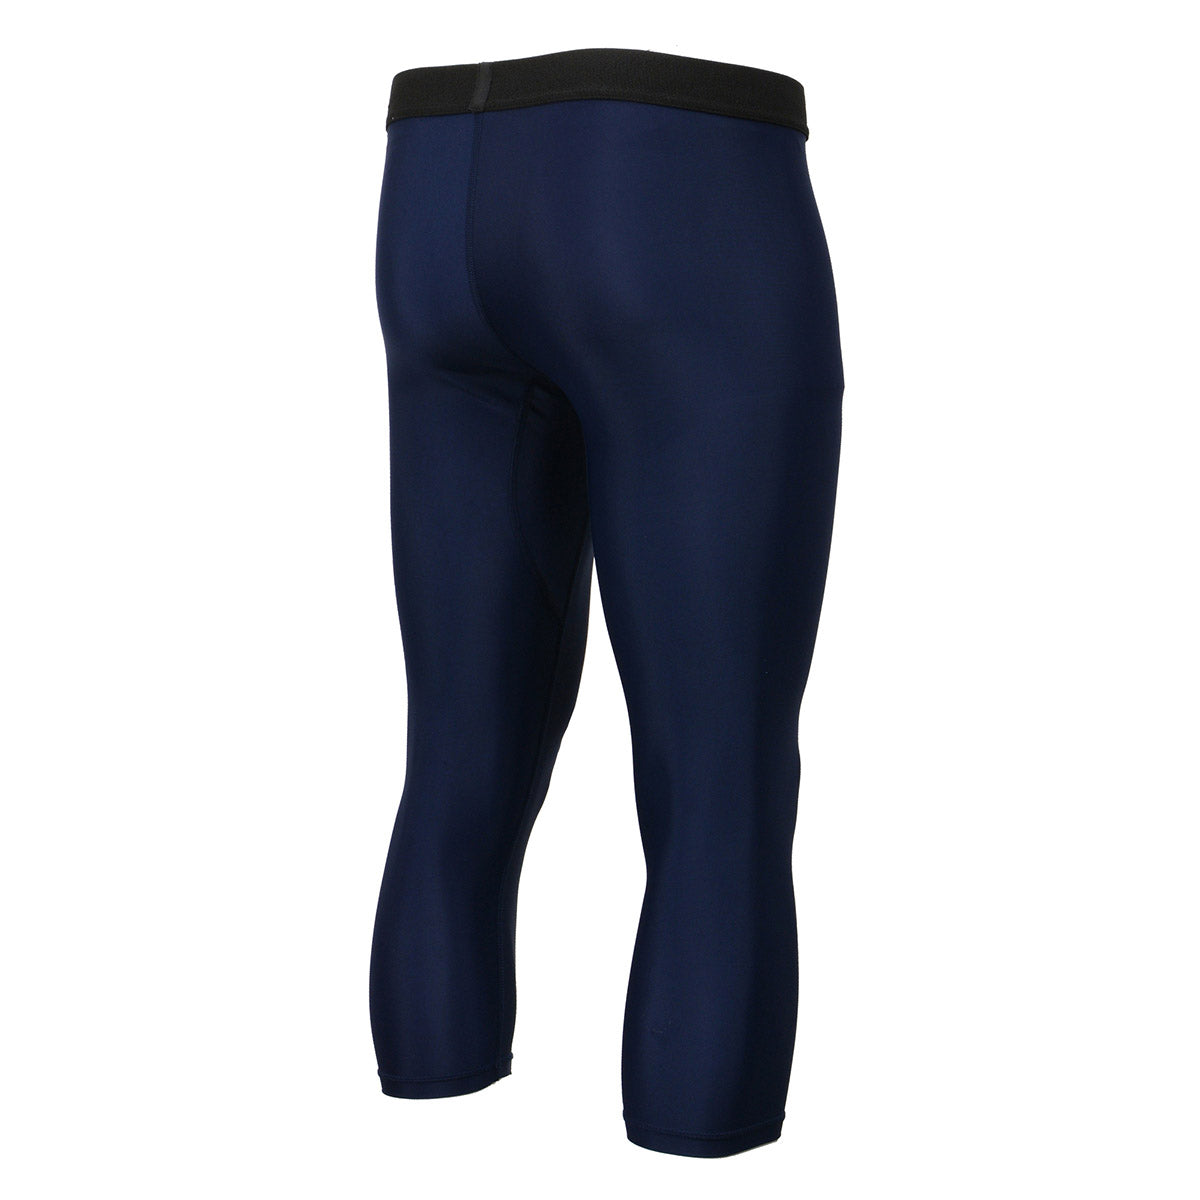 X-Fitness XFM7003 Men's Blue 3/4 Length Compression Base Layer Workout Pants Jiu Jitsu Spats Tights